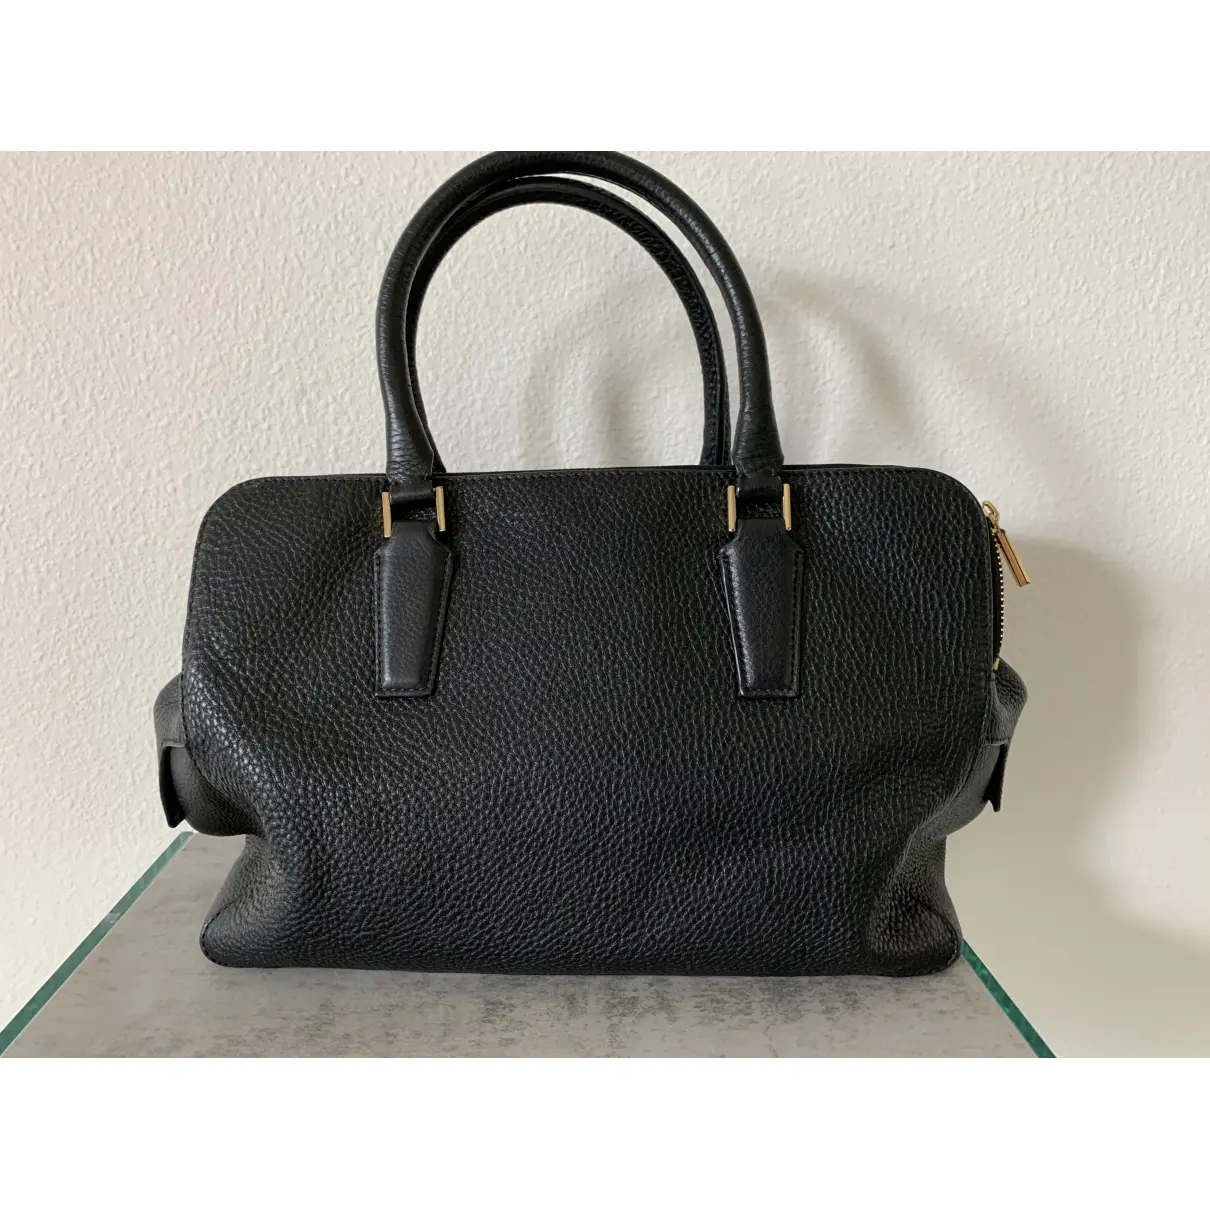 Tory Burch Leather handbag for sale